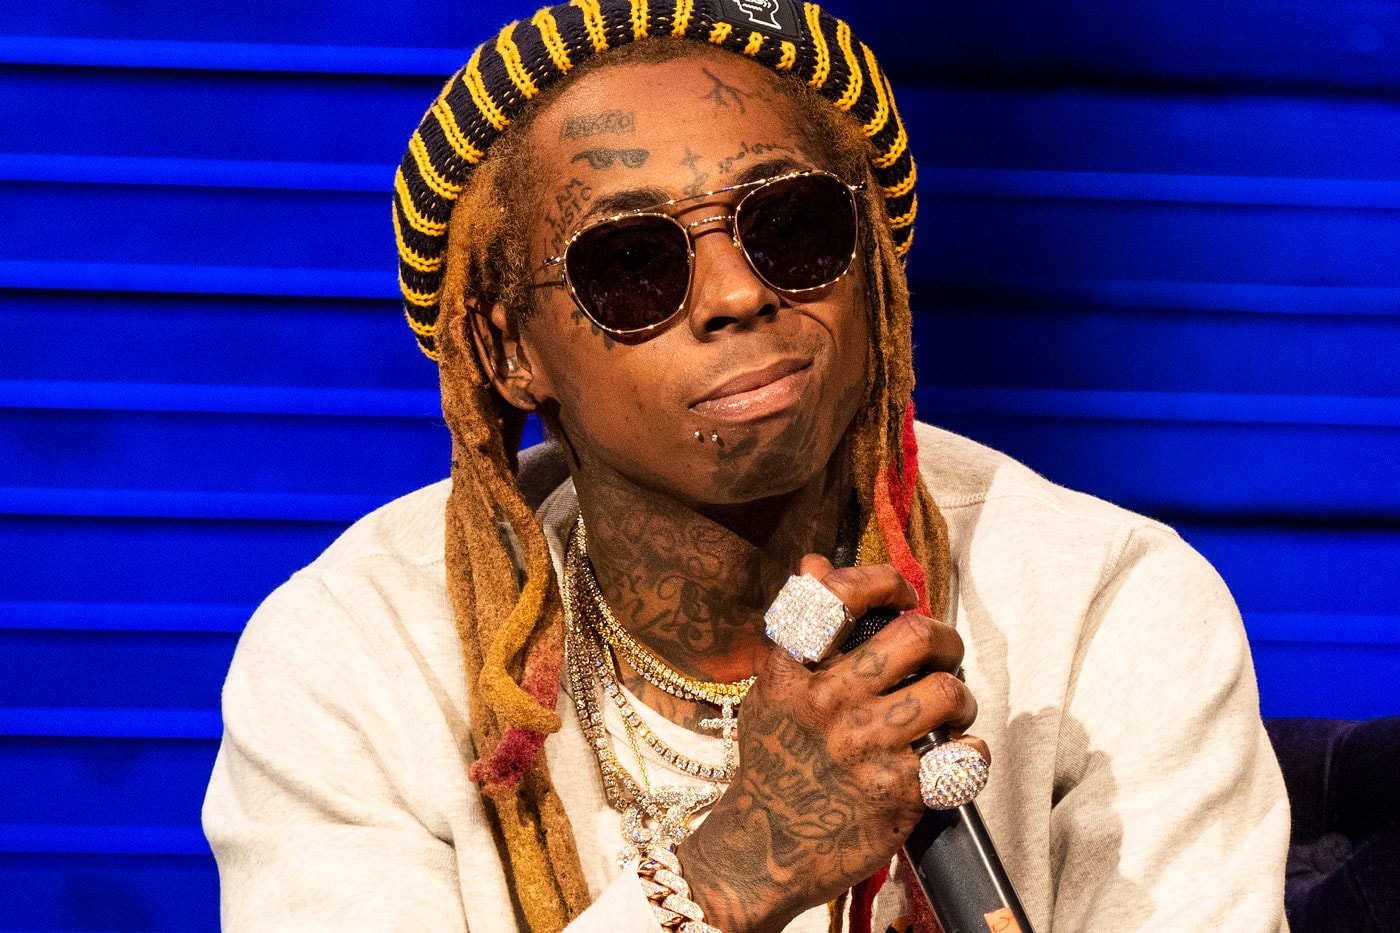 According to Birdman, Lil Wayne Never Turned in 'Tha Carter V'